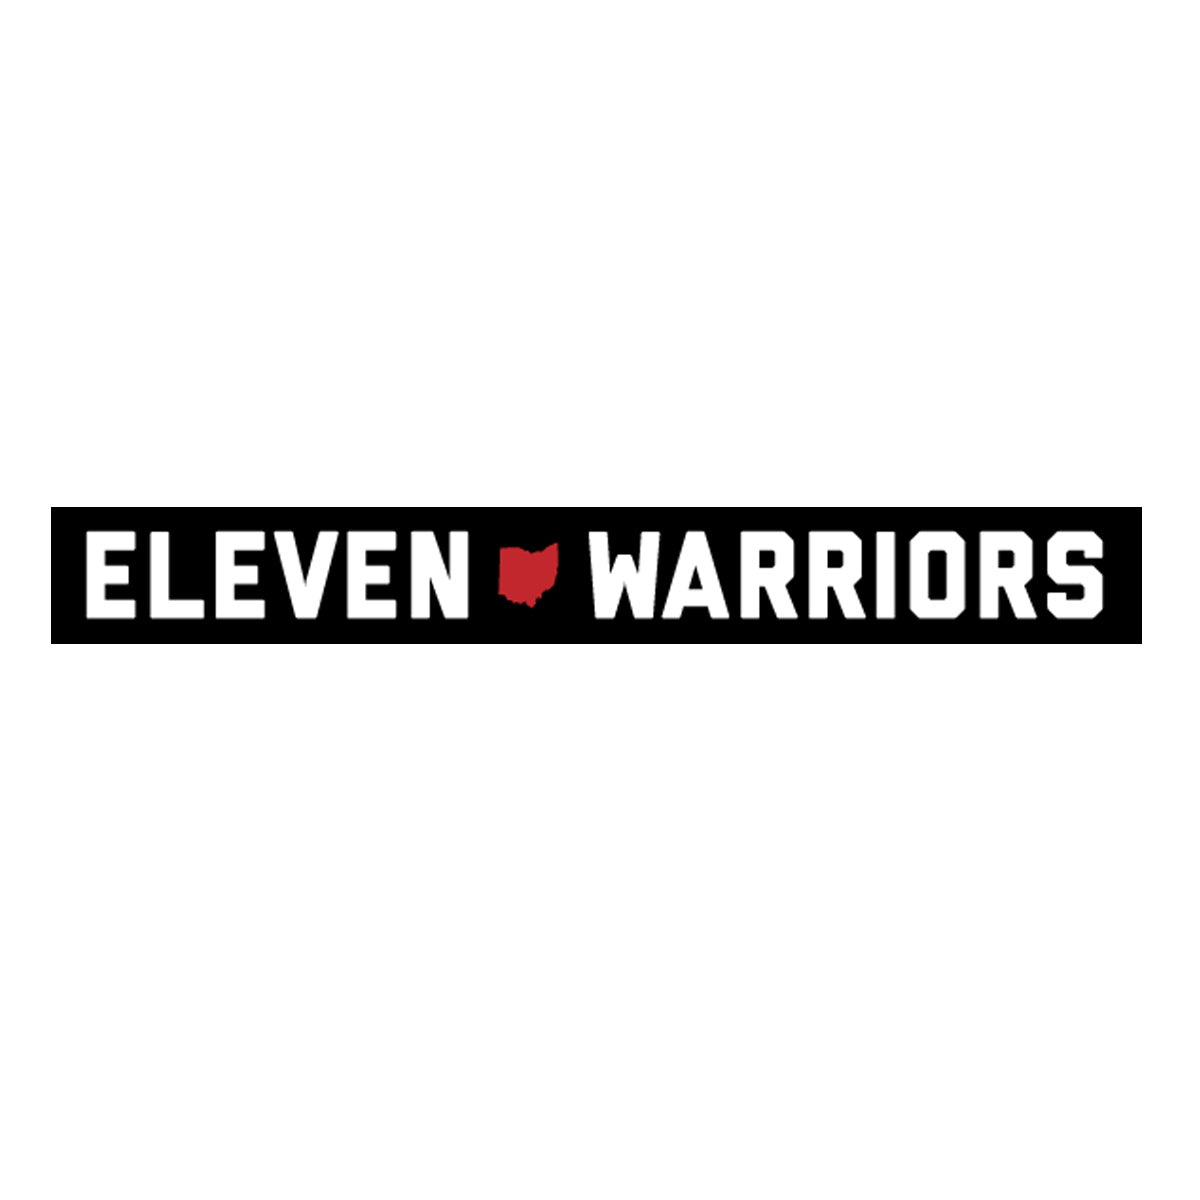 Eleven Warriors Thin Bumper Sticker